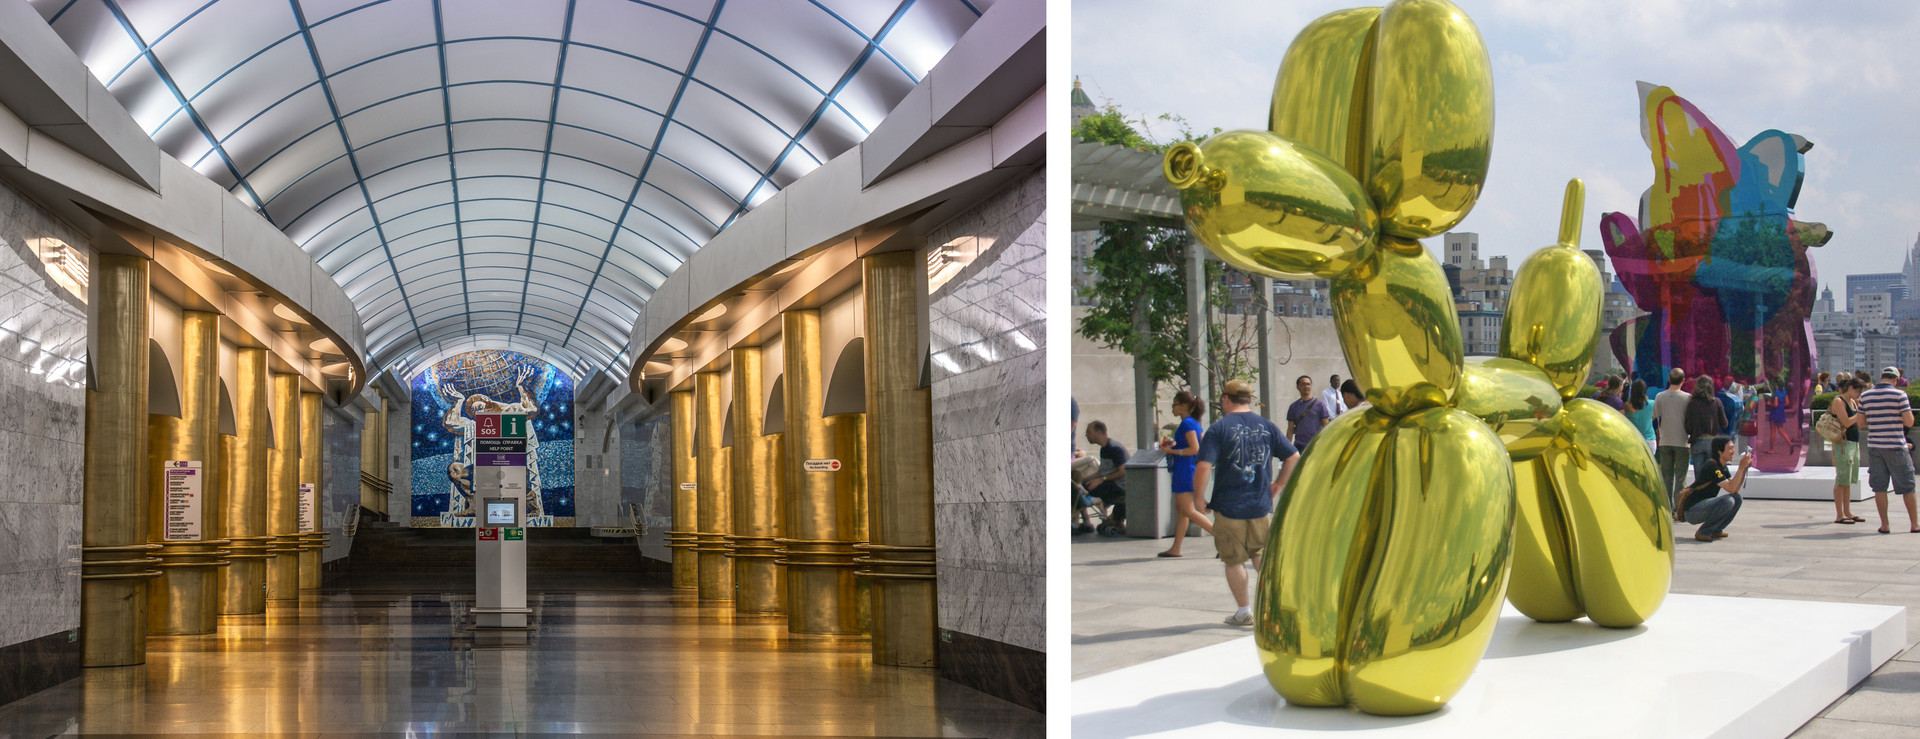 Gold columns of Mezhdunarodnaya station remind locals of balloon dogs by American artist Jeff Koons